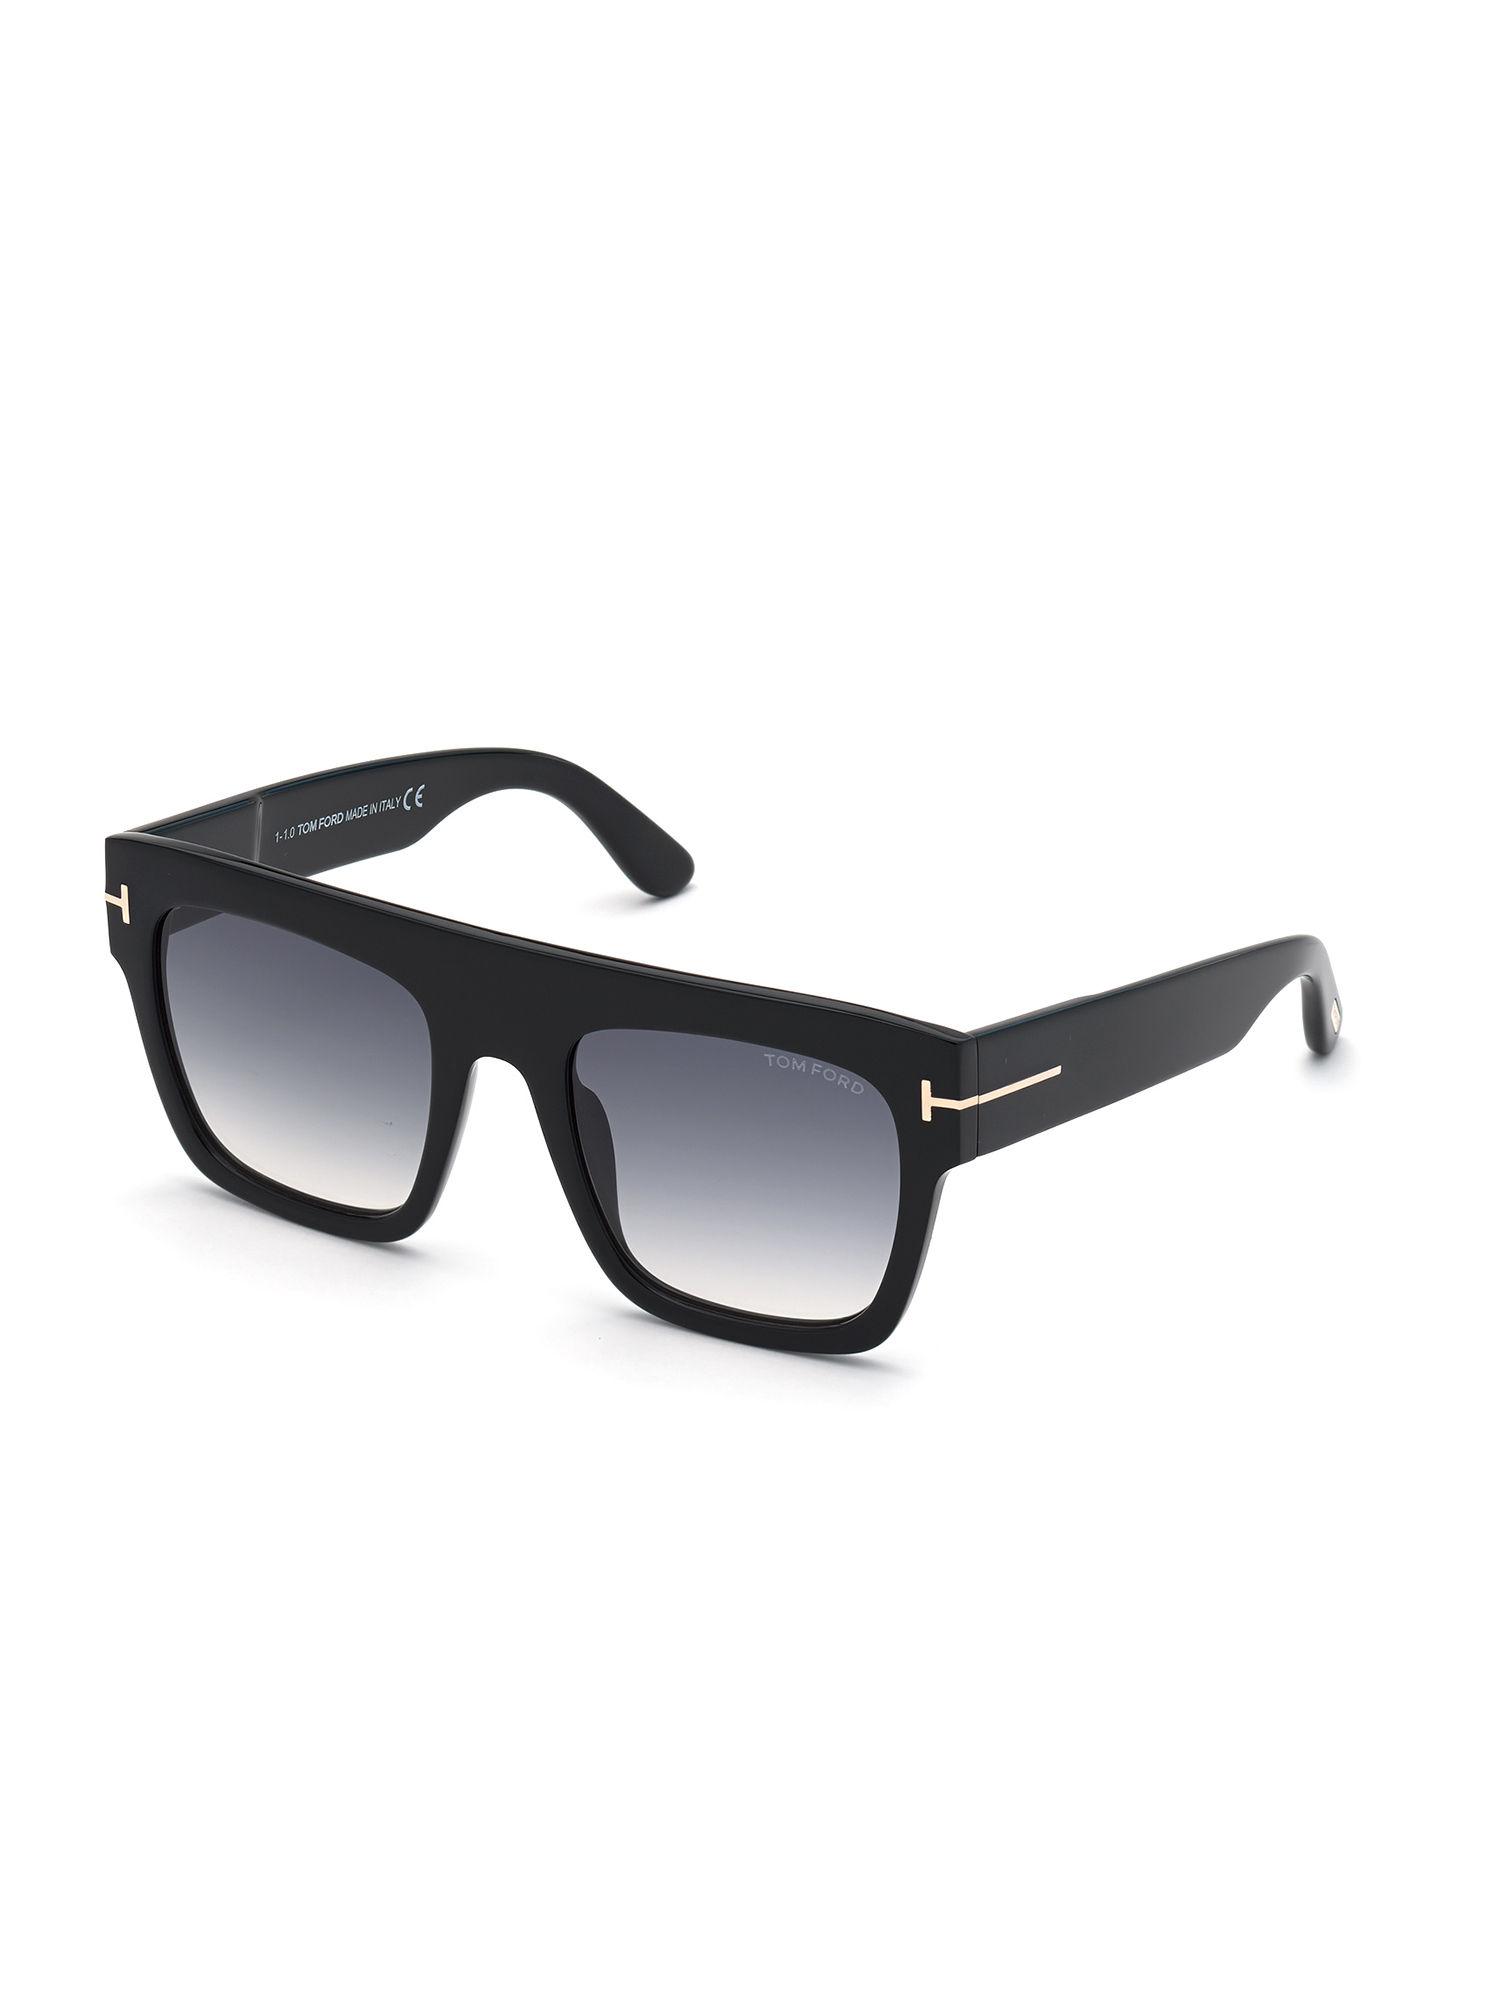 Black Plastic Sunglasses FT0847 52 01B